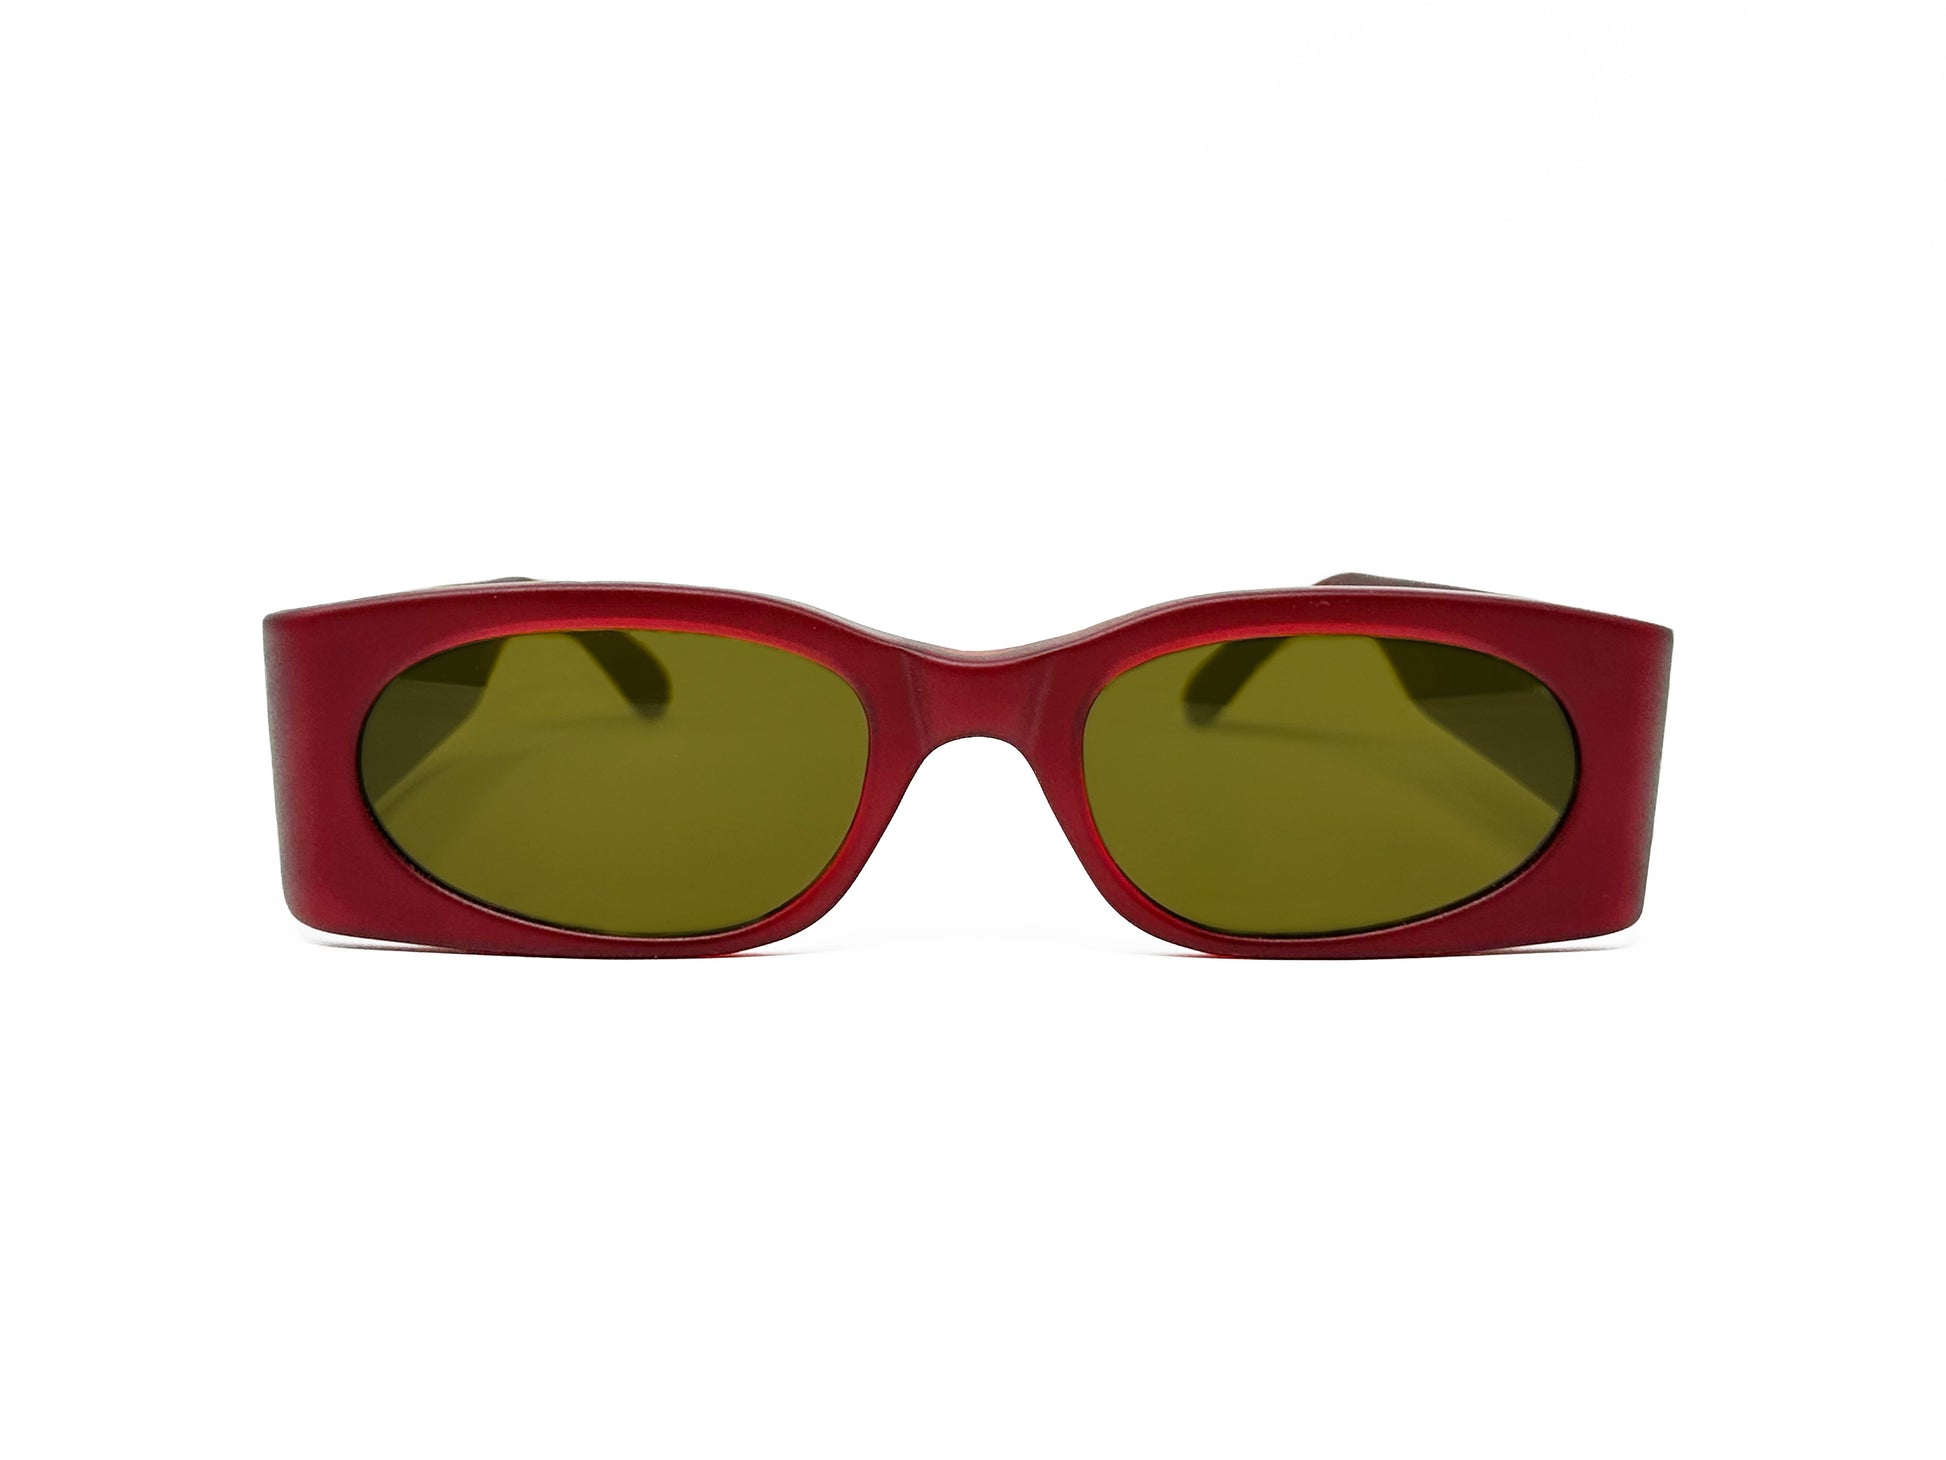 Kador rectangular acetate sunglasses with oval lenses. Model: DF2012. Color: M/1975 - Burgundy. Front view.